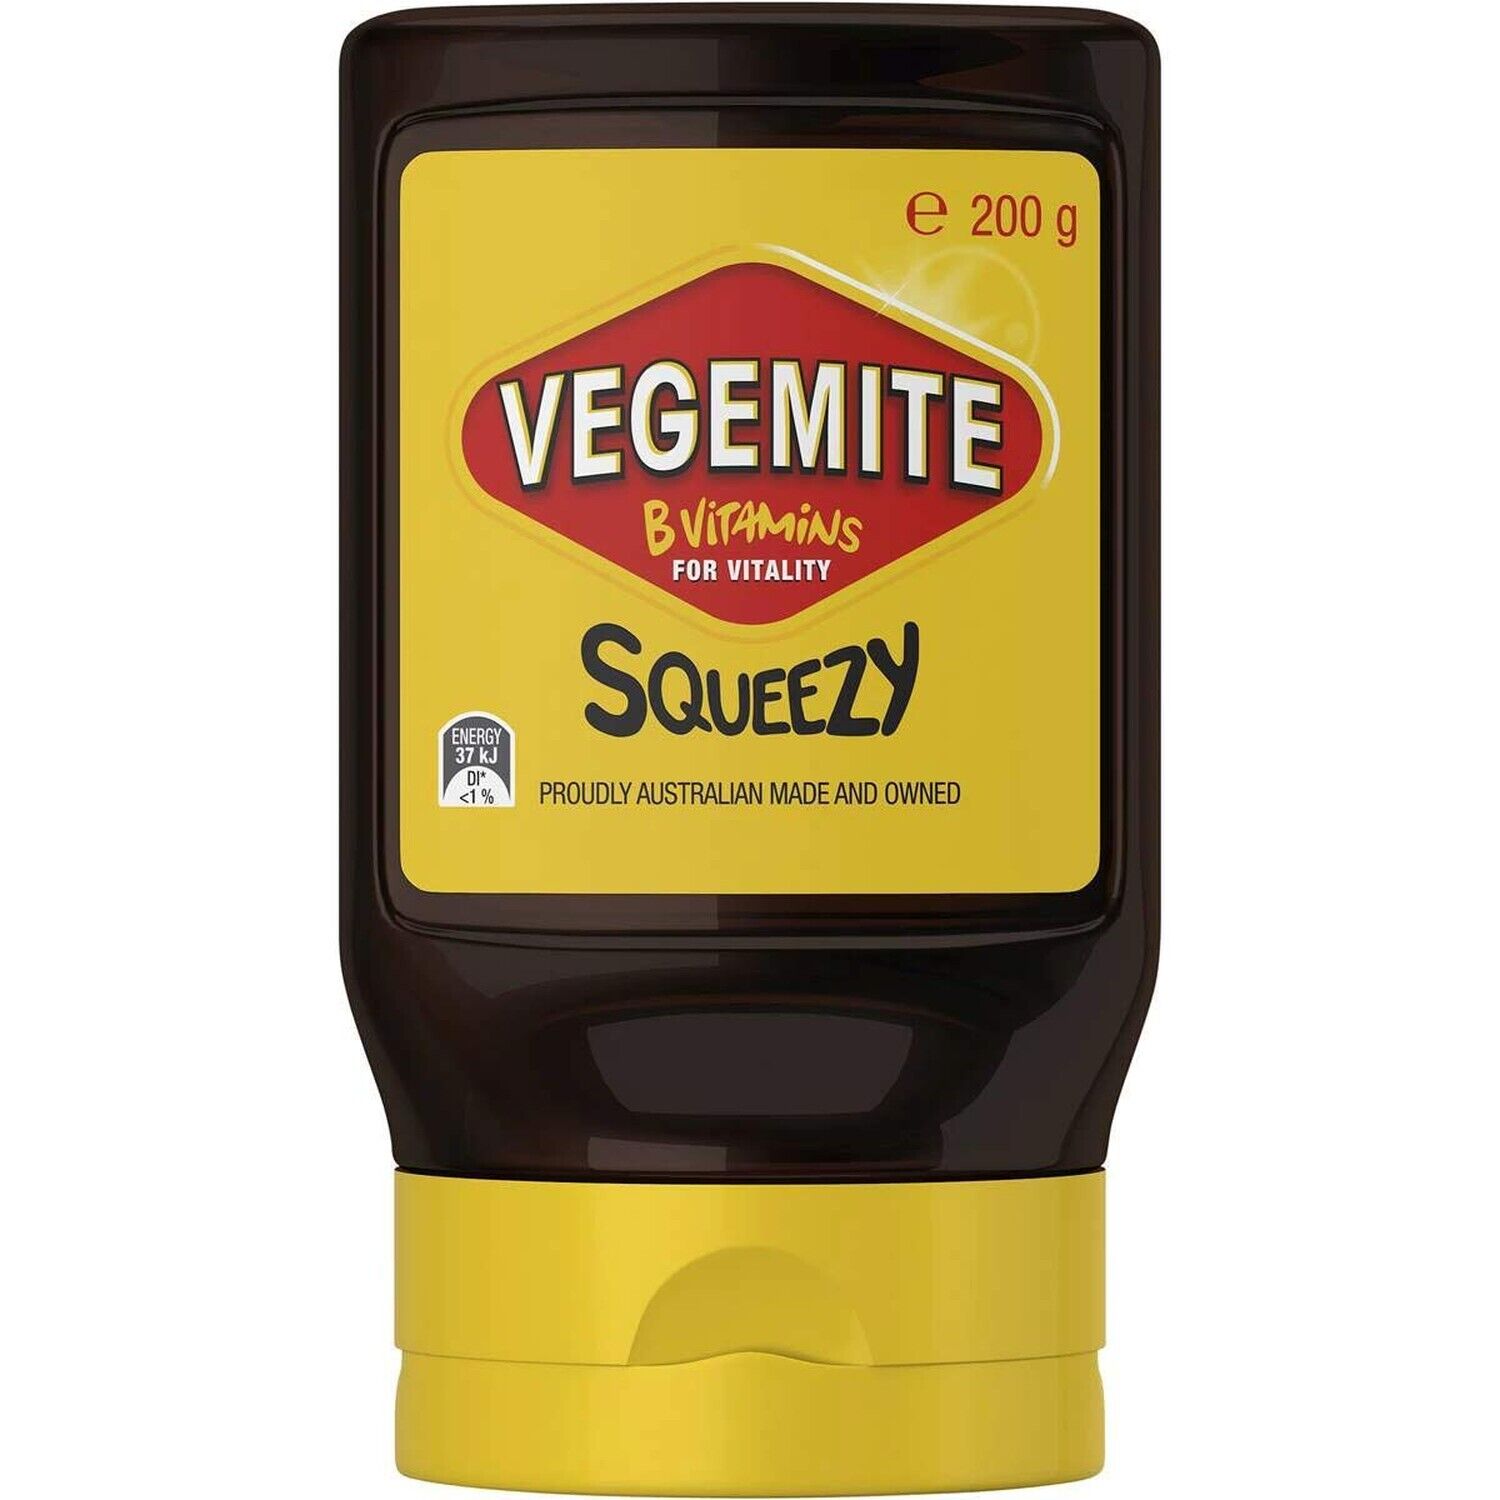 Vegemite Squeezy Spread 200g - Made in Australia